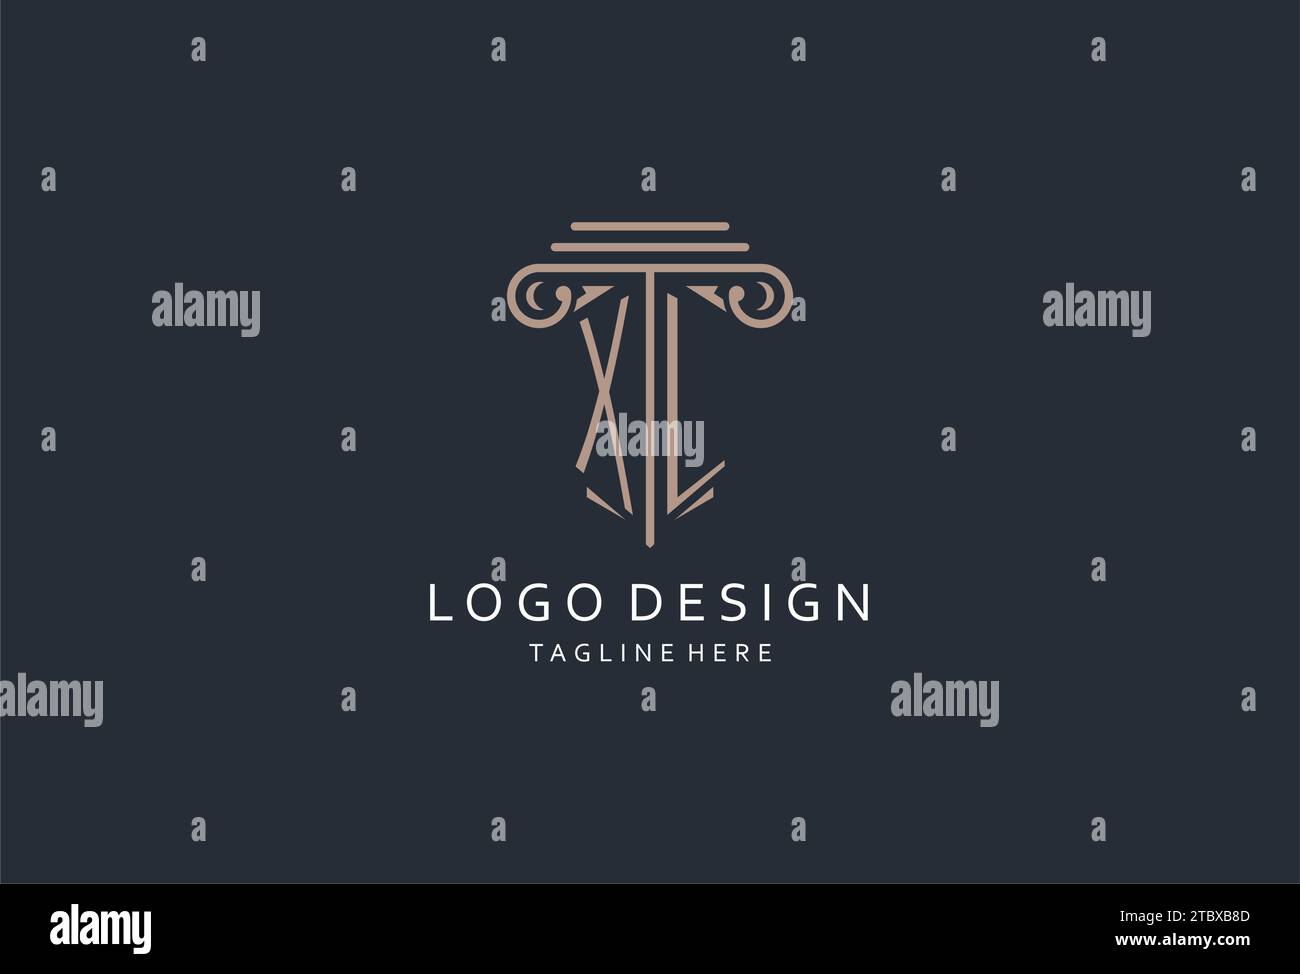 XL monogram logo with pillar shape icon, luxury and elegant design logo for law firm initial style logo design ideas Stock Vector